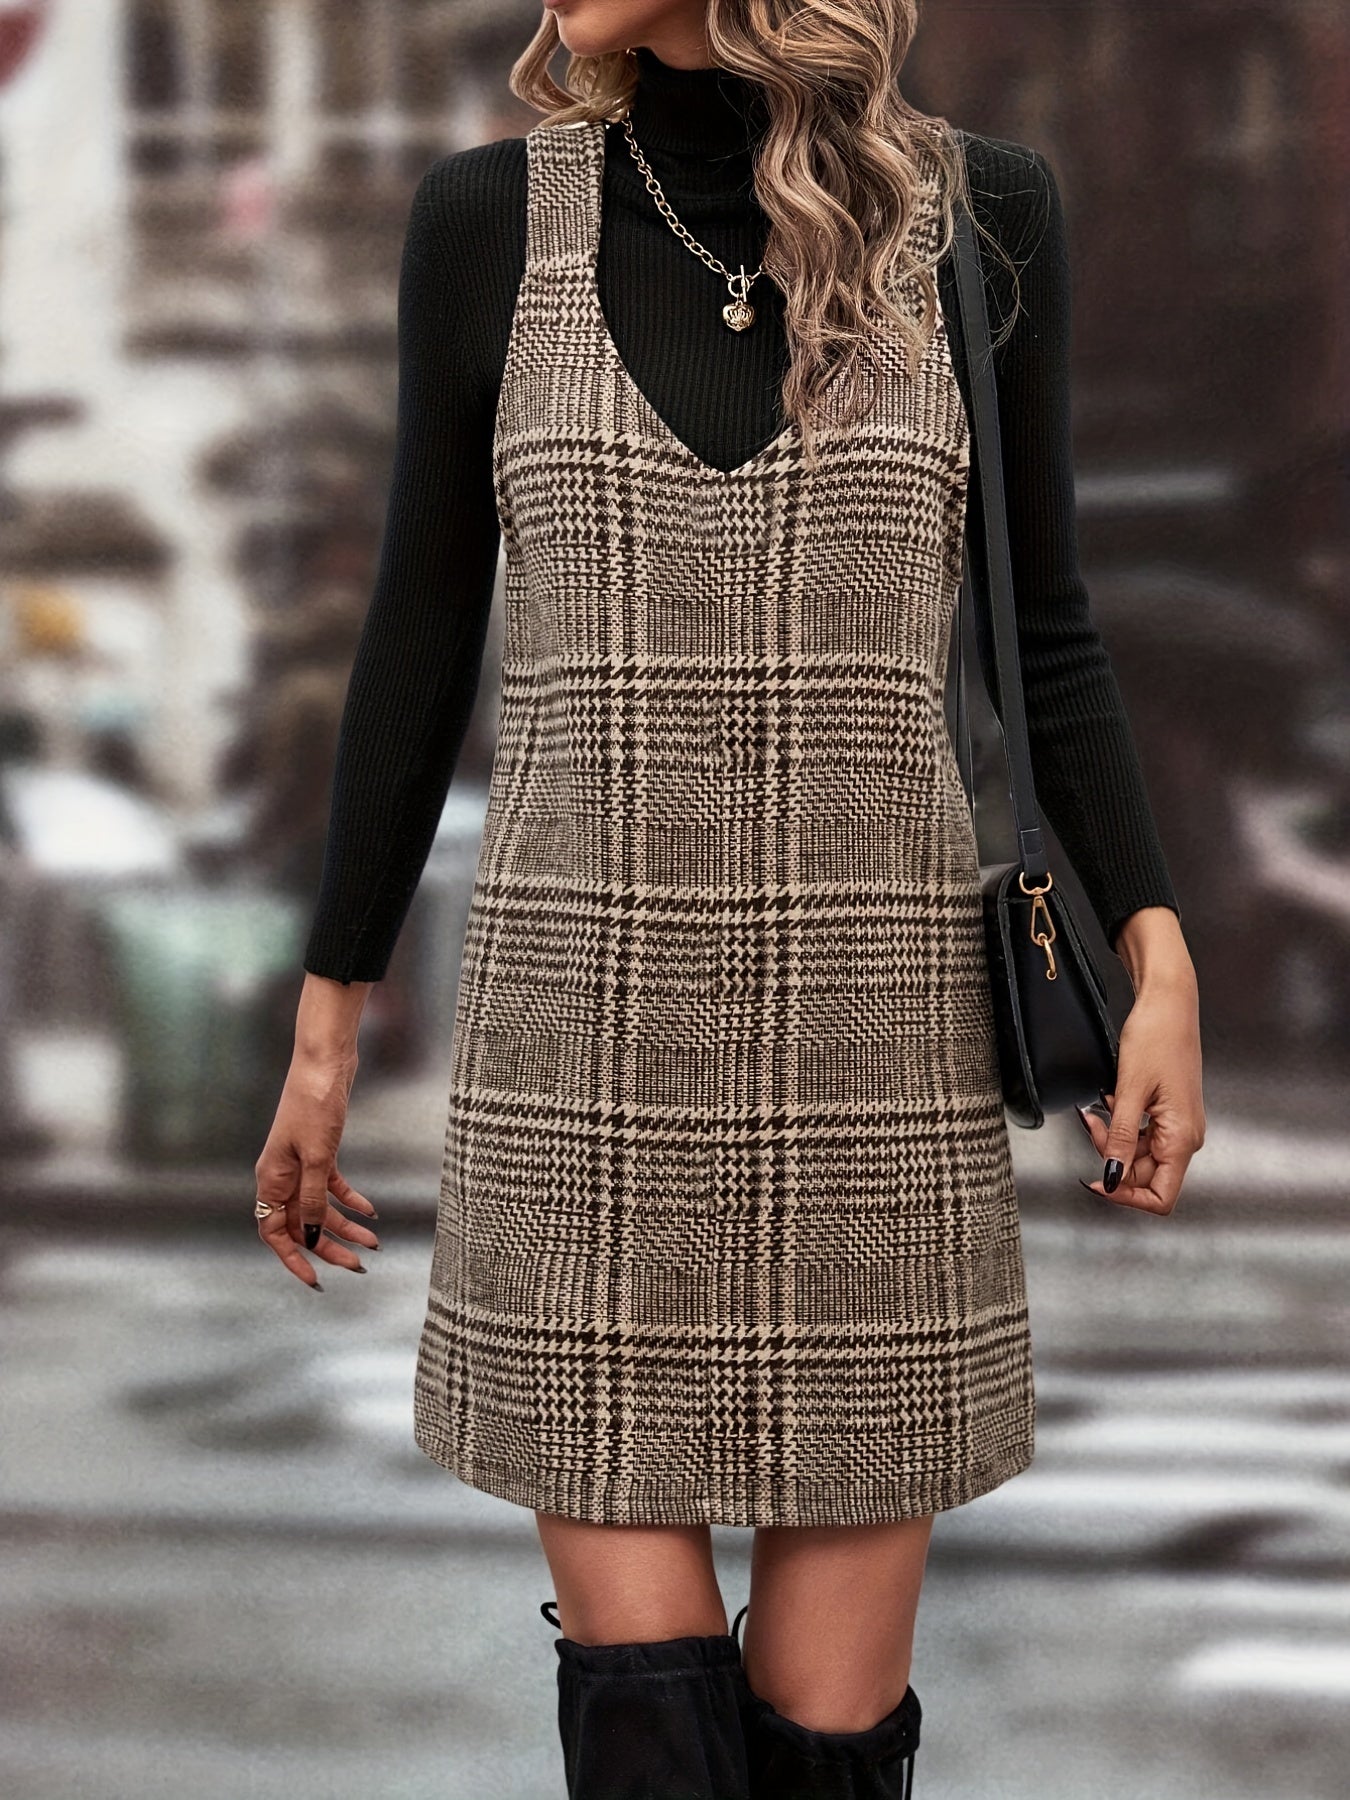 Antmvs Houndstooth Print Sleeveless Tank Dress, Stylish V Neck Dress For Fall & Winter, Women's Clothing